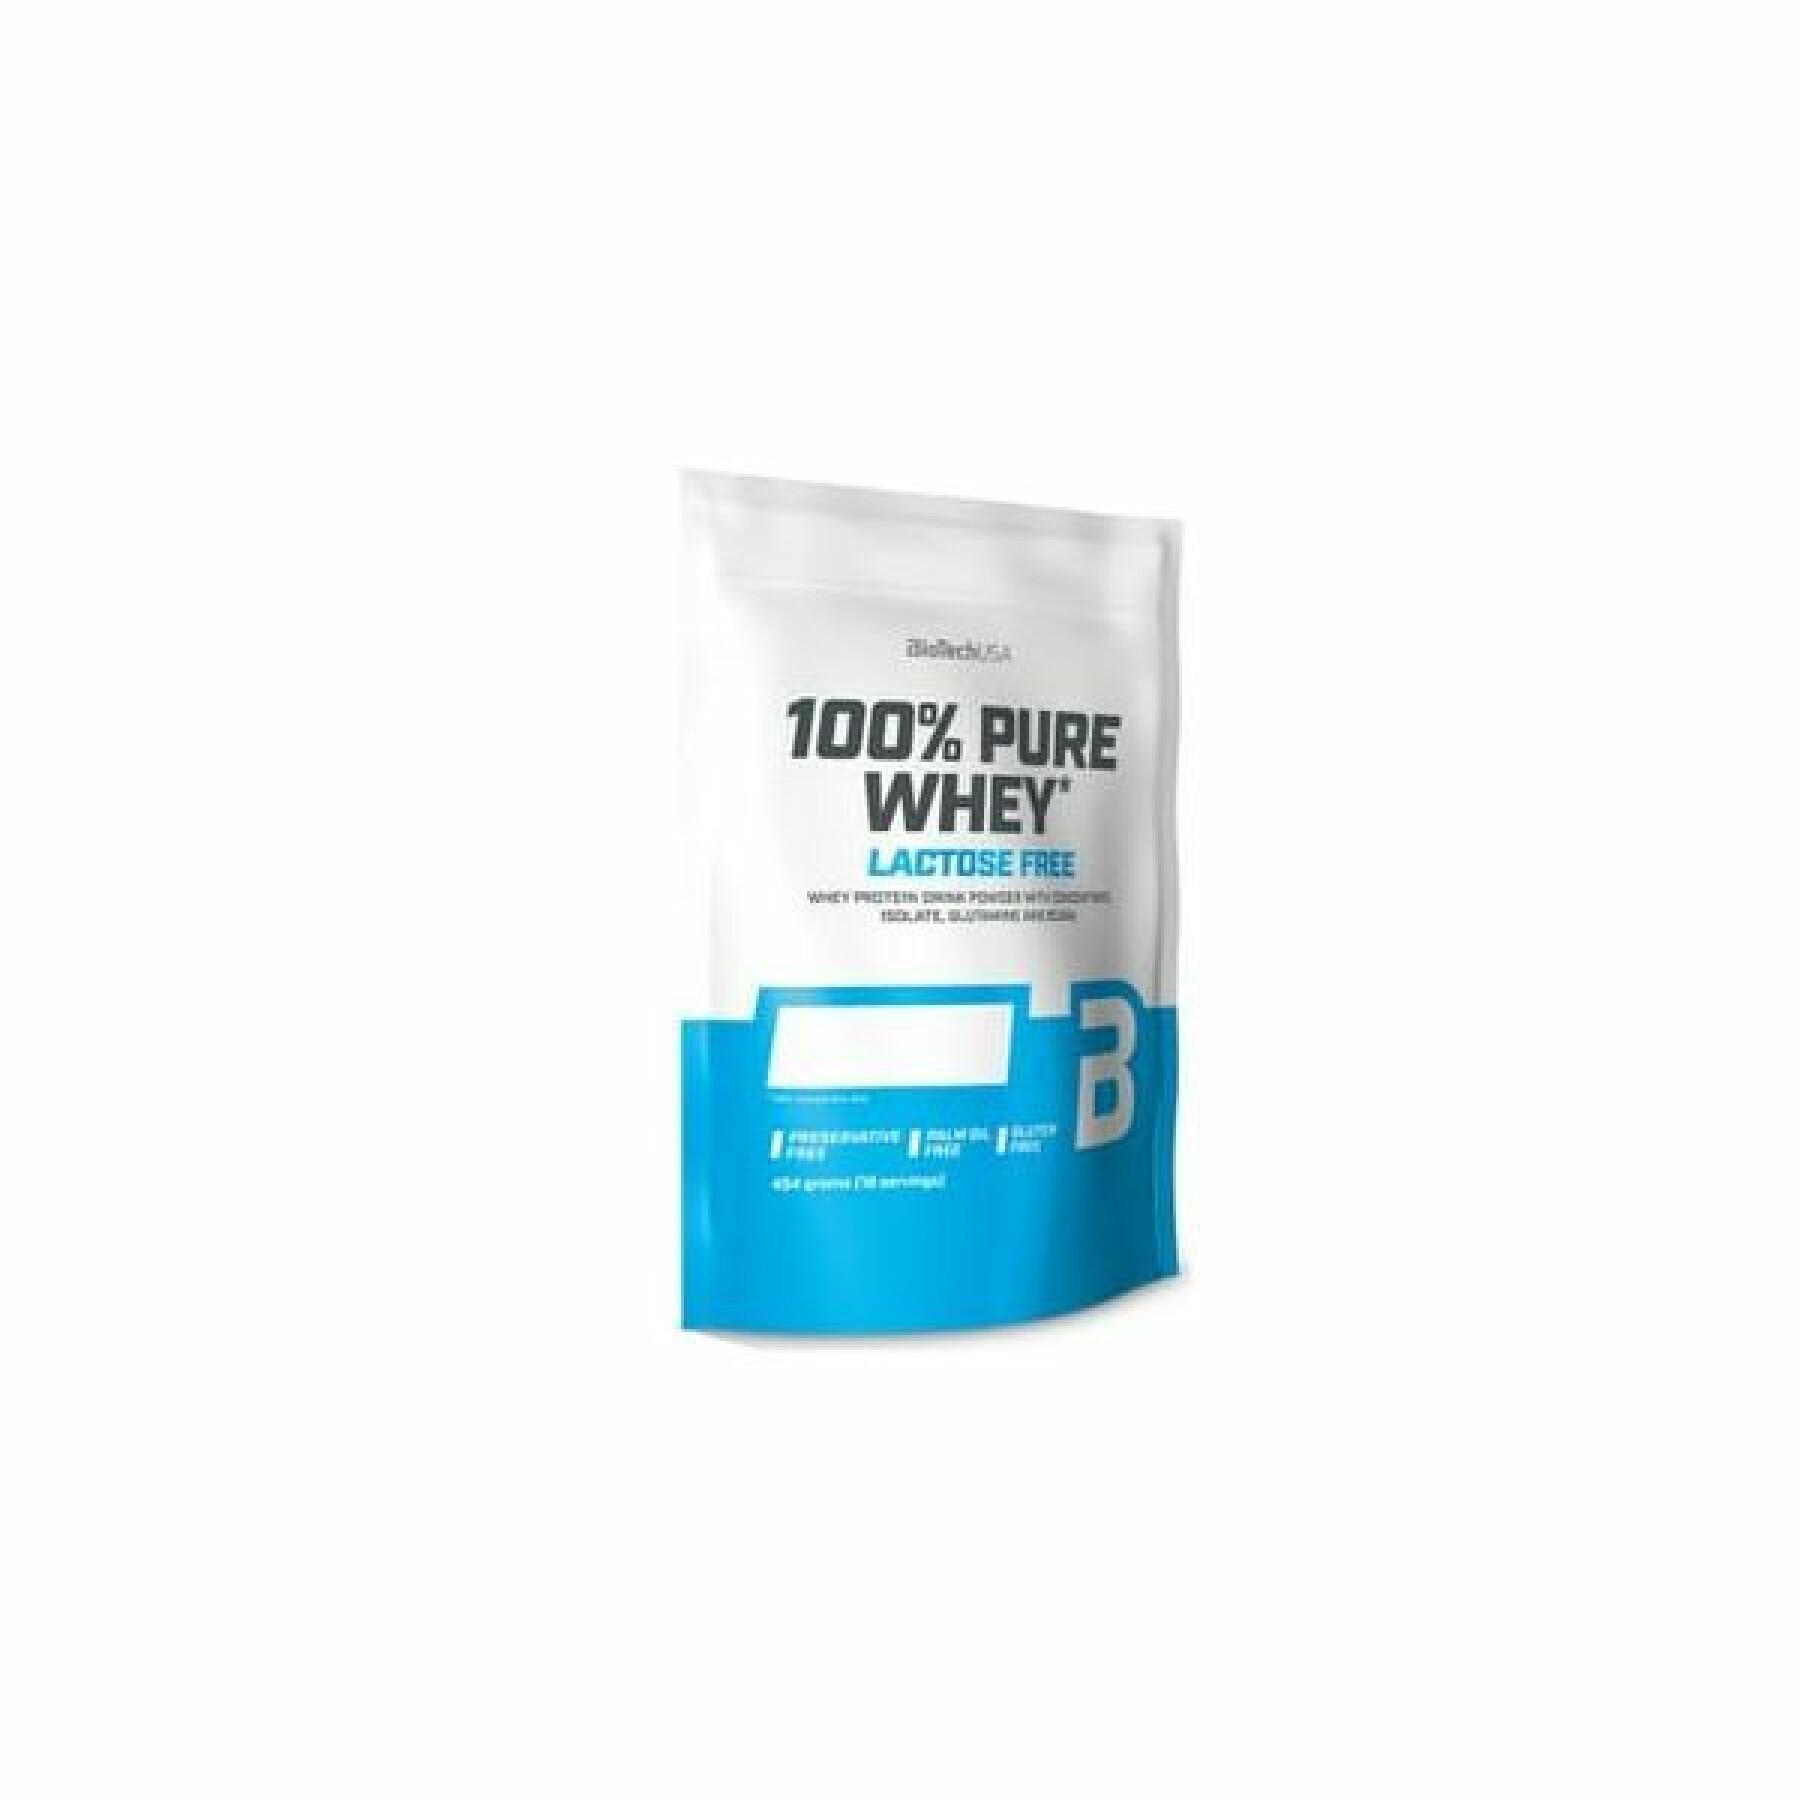 Lot de 10 sacs de protéines Biotech USA 100% pure whey lactose free - Chocolate - 454g